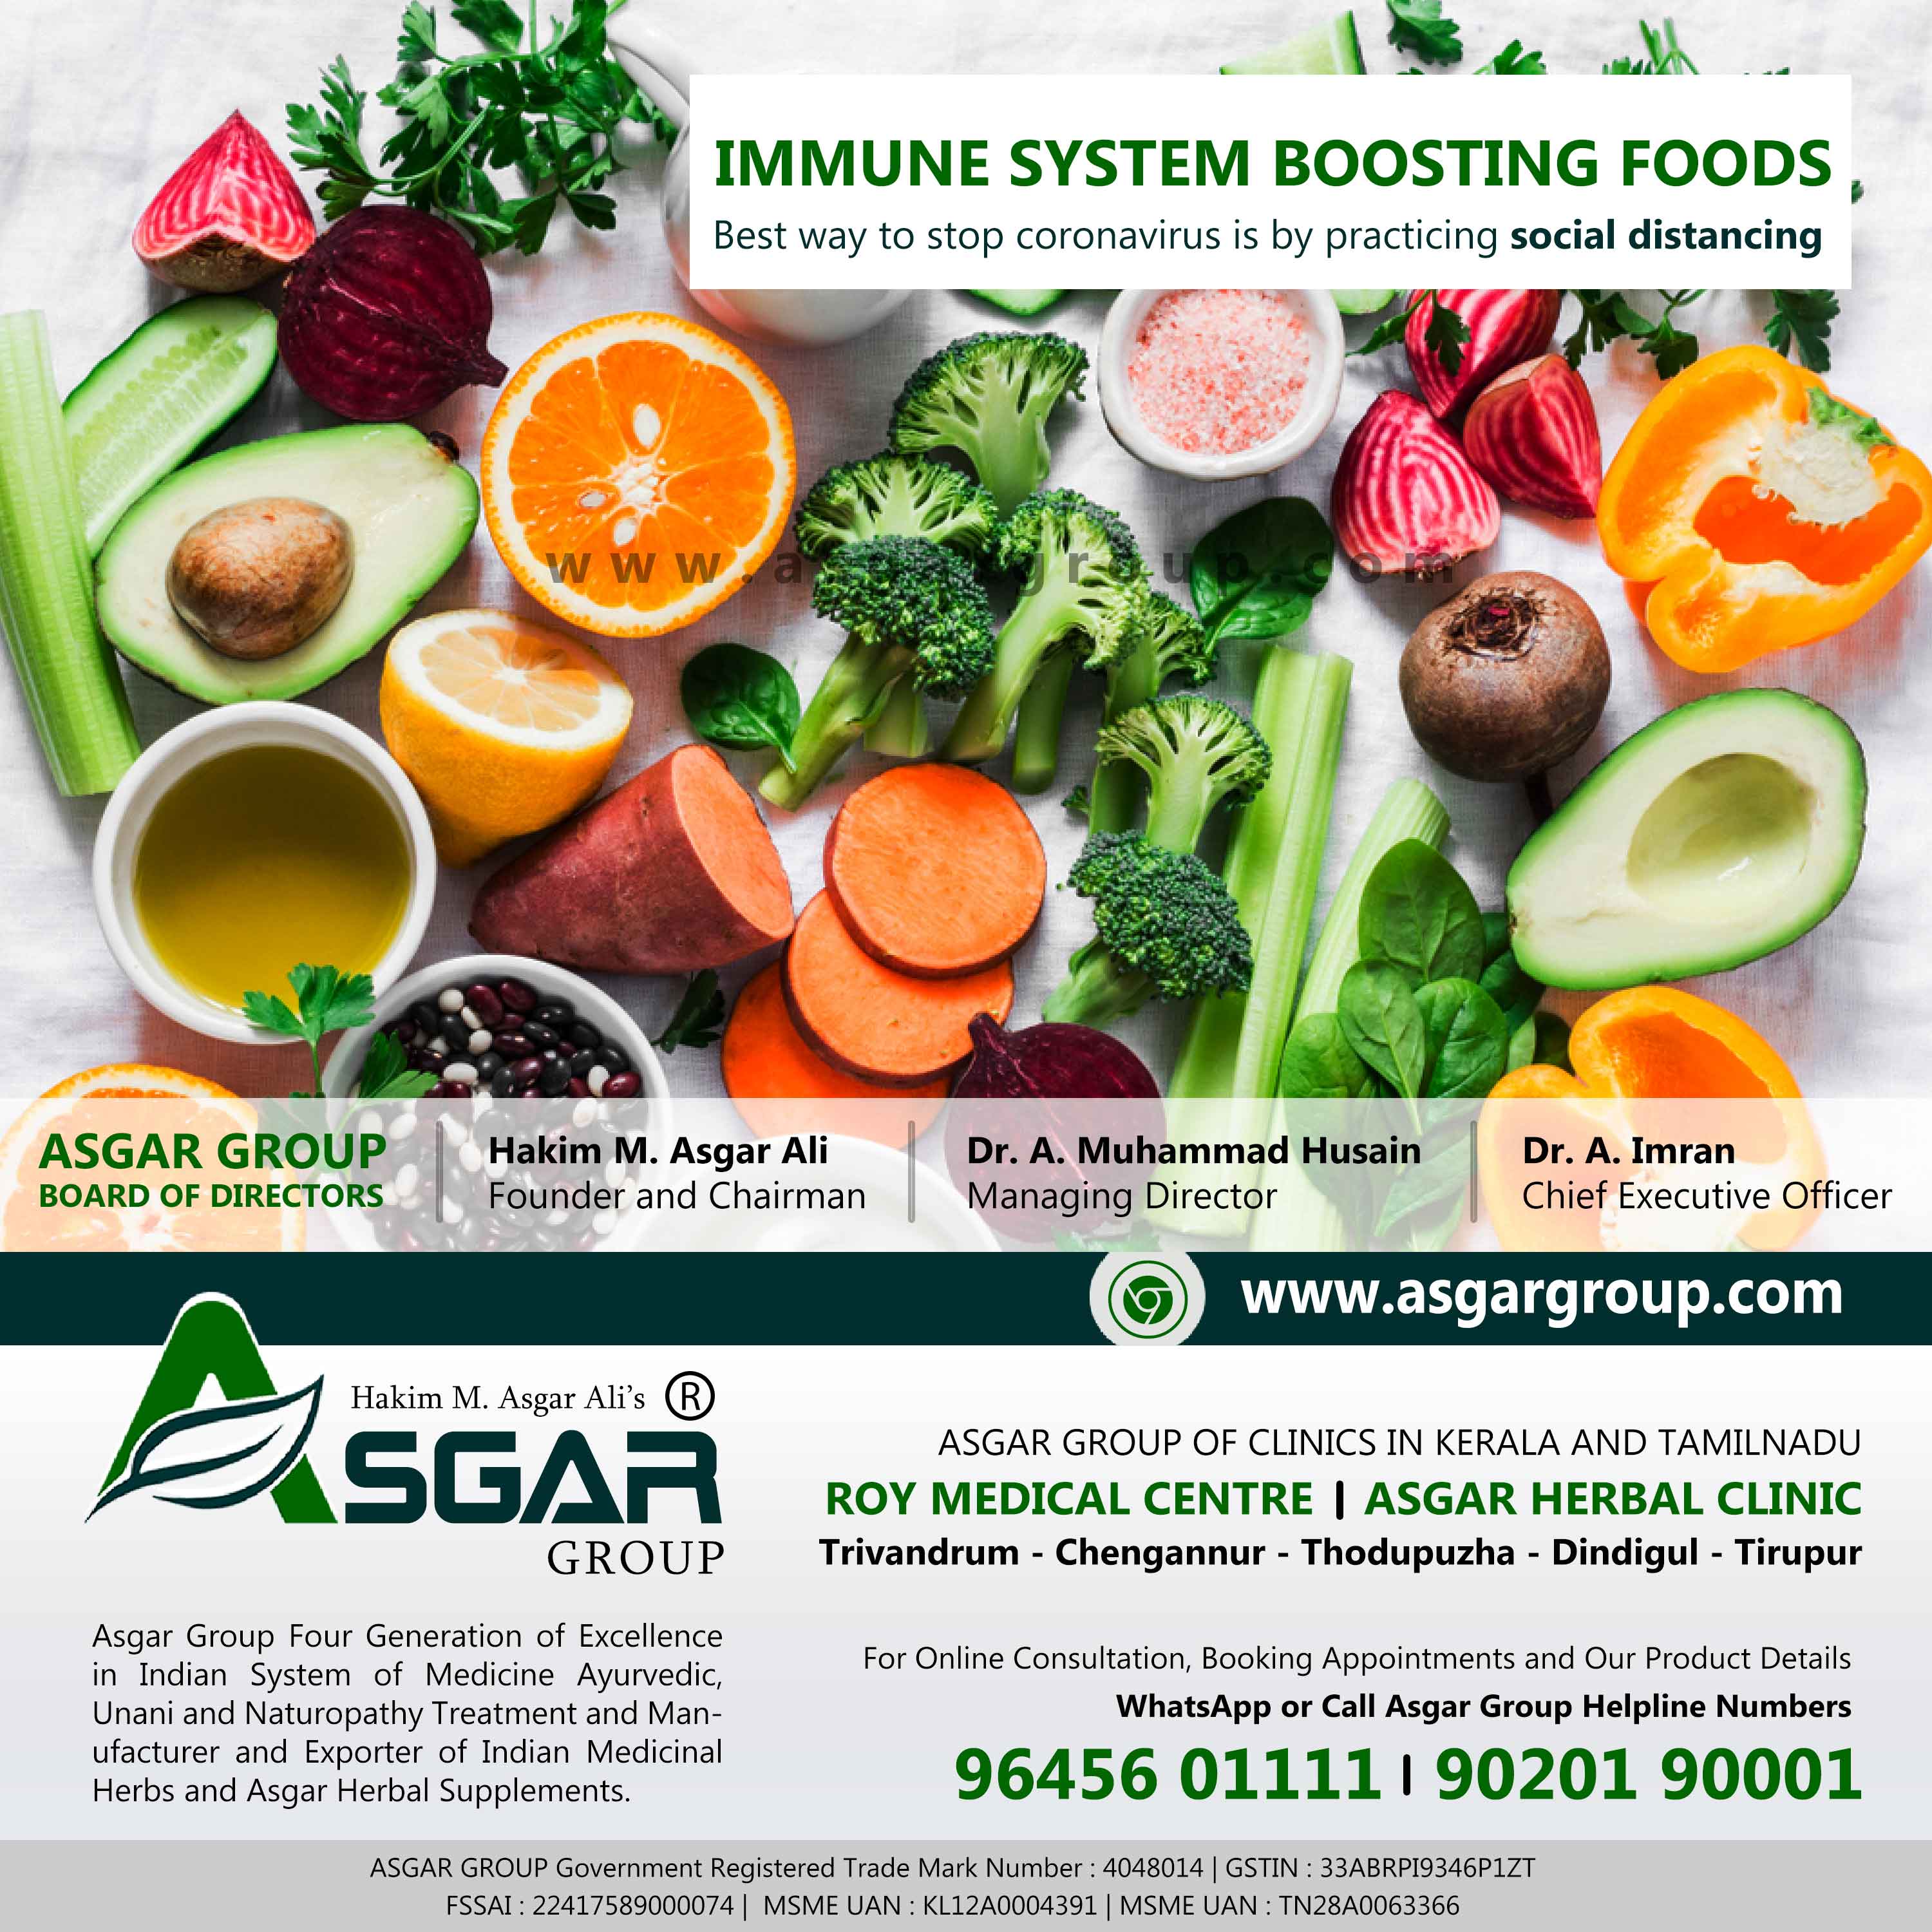 Immune system boosting foods | ASGAR Healthcare Group